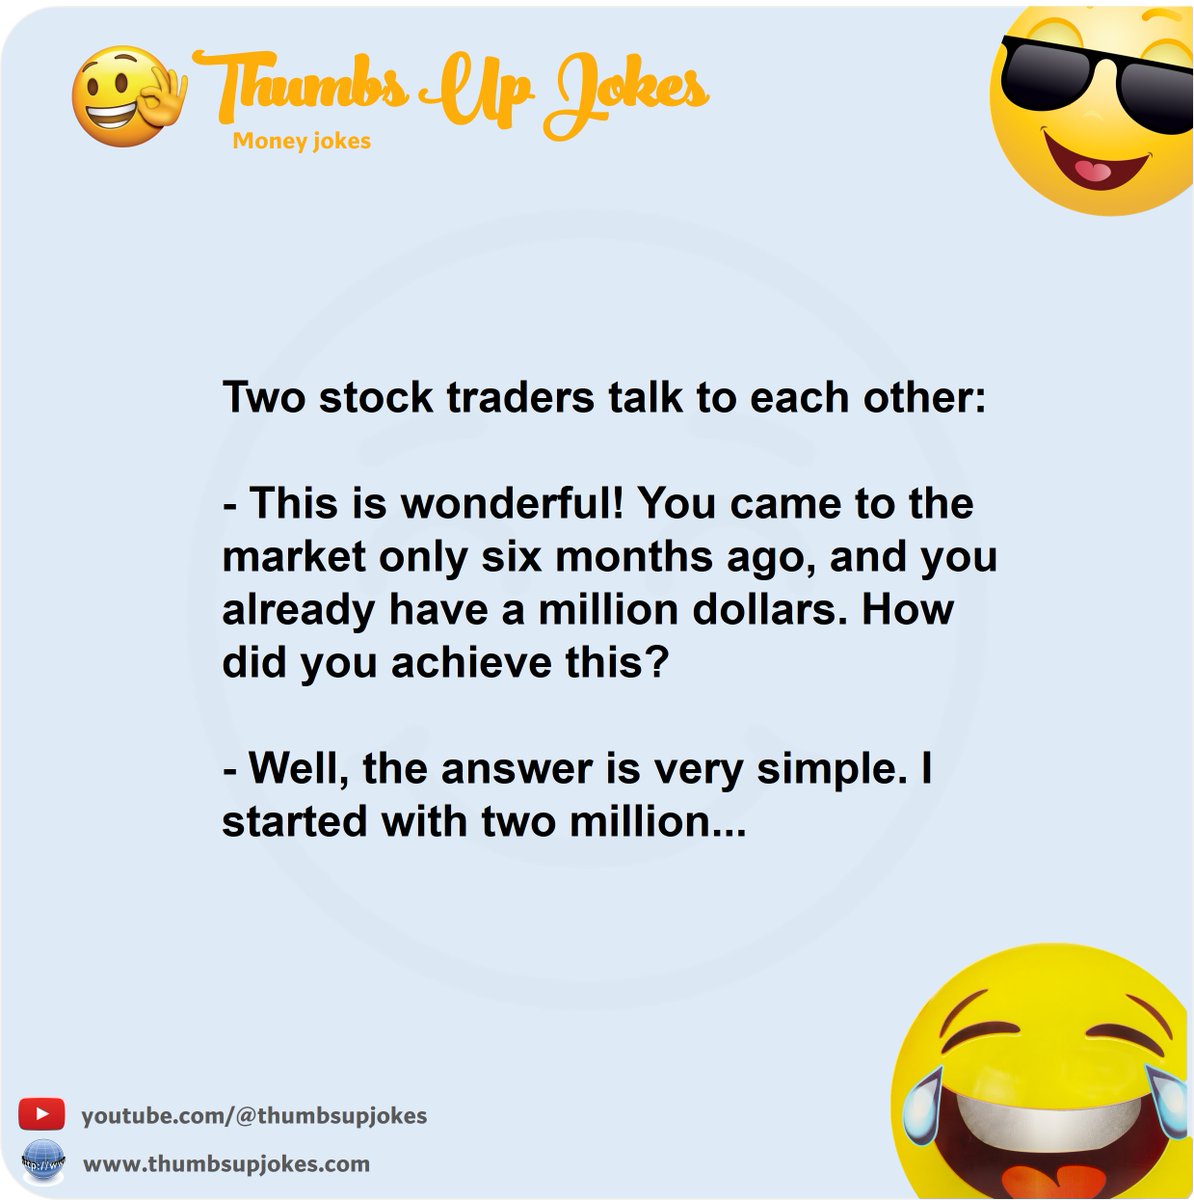 Stock market brokers joke.
#jokes #joke #fun #funny #humor #comedy #moneyjokes #stockmarket